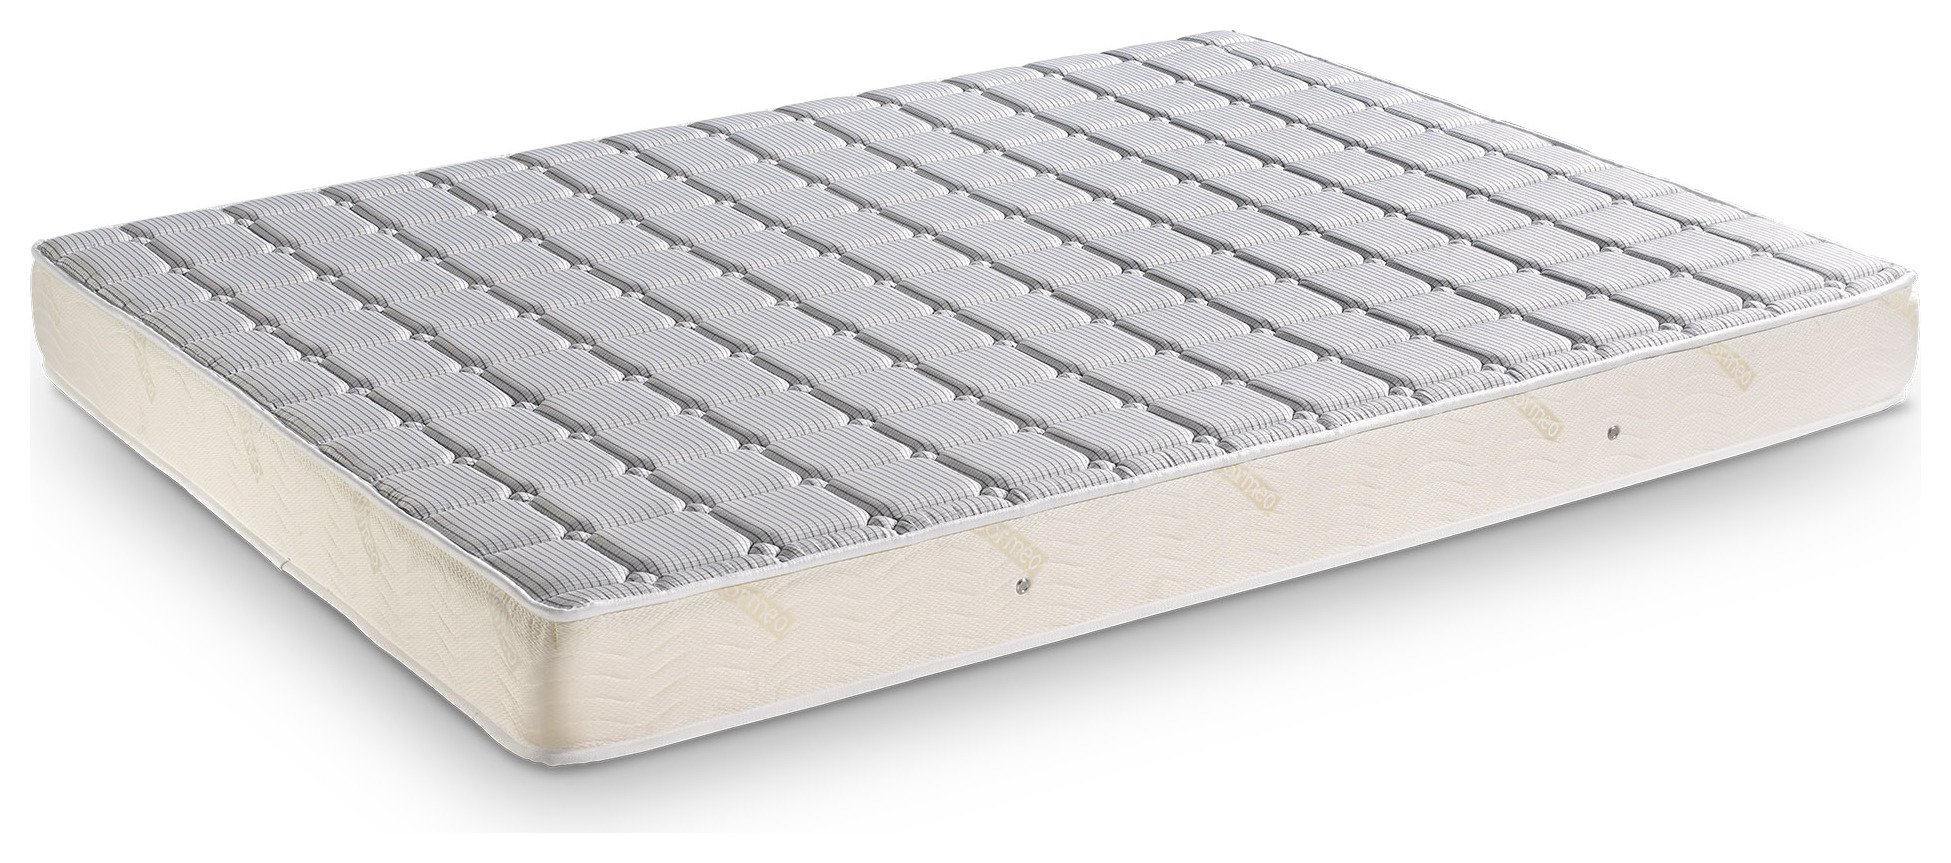 dormeo memory classic mattress reviews